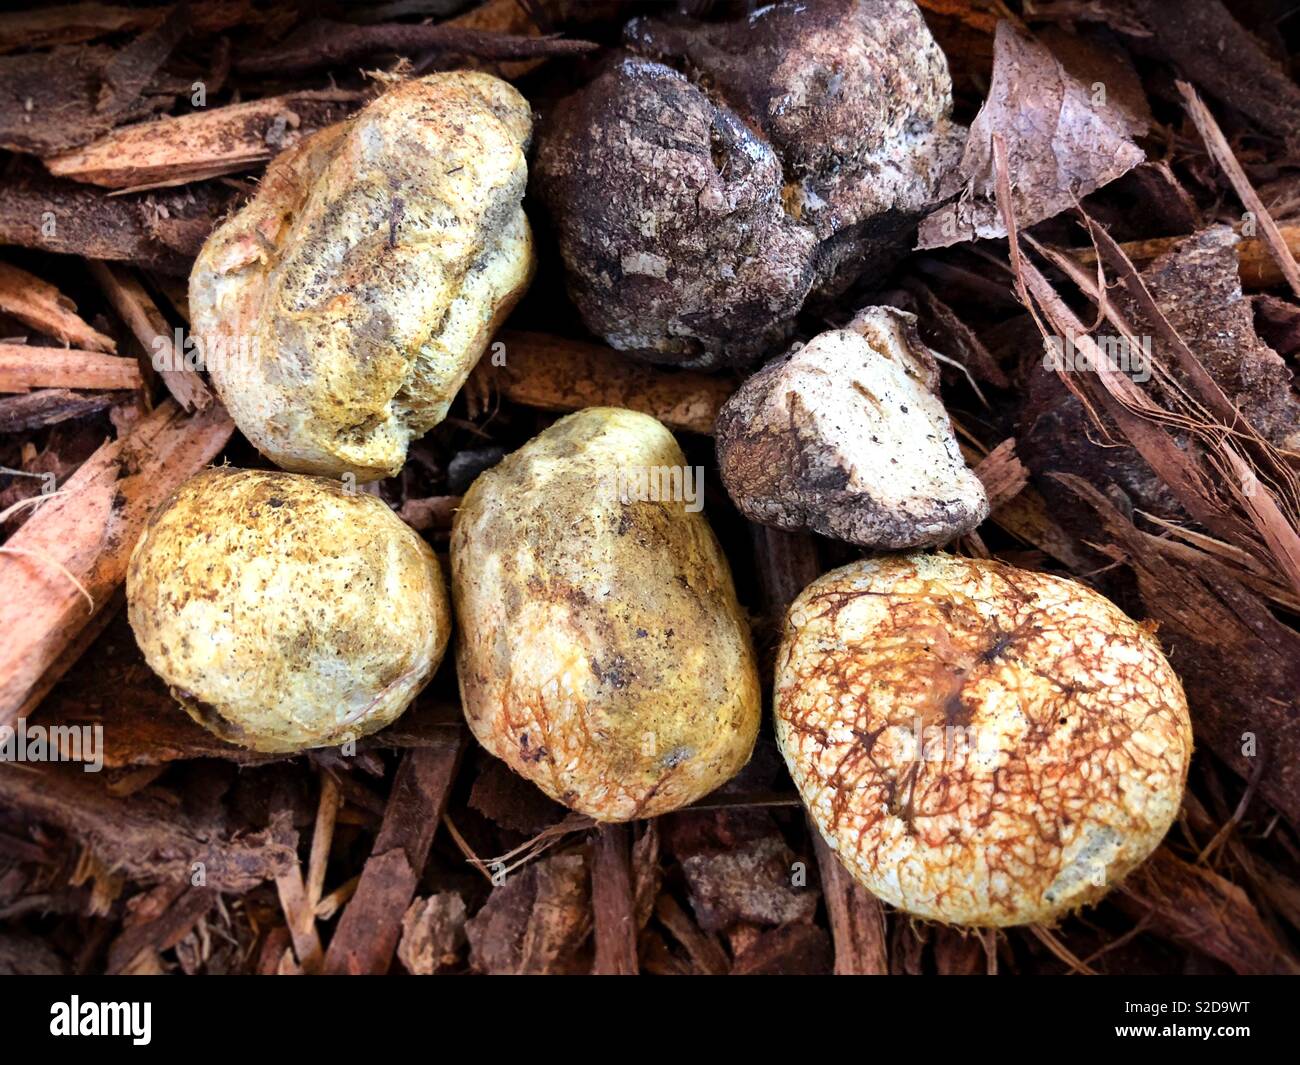 False truffle mushrooms. Stock Photo